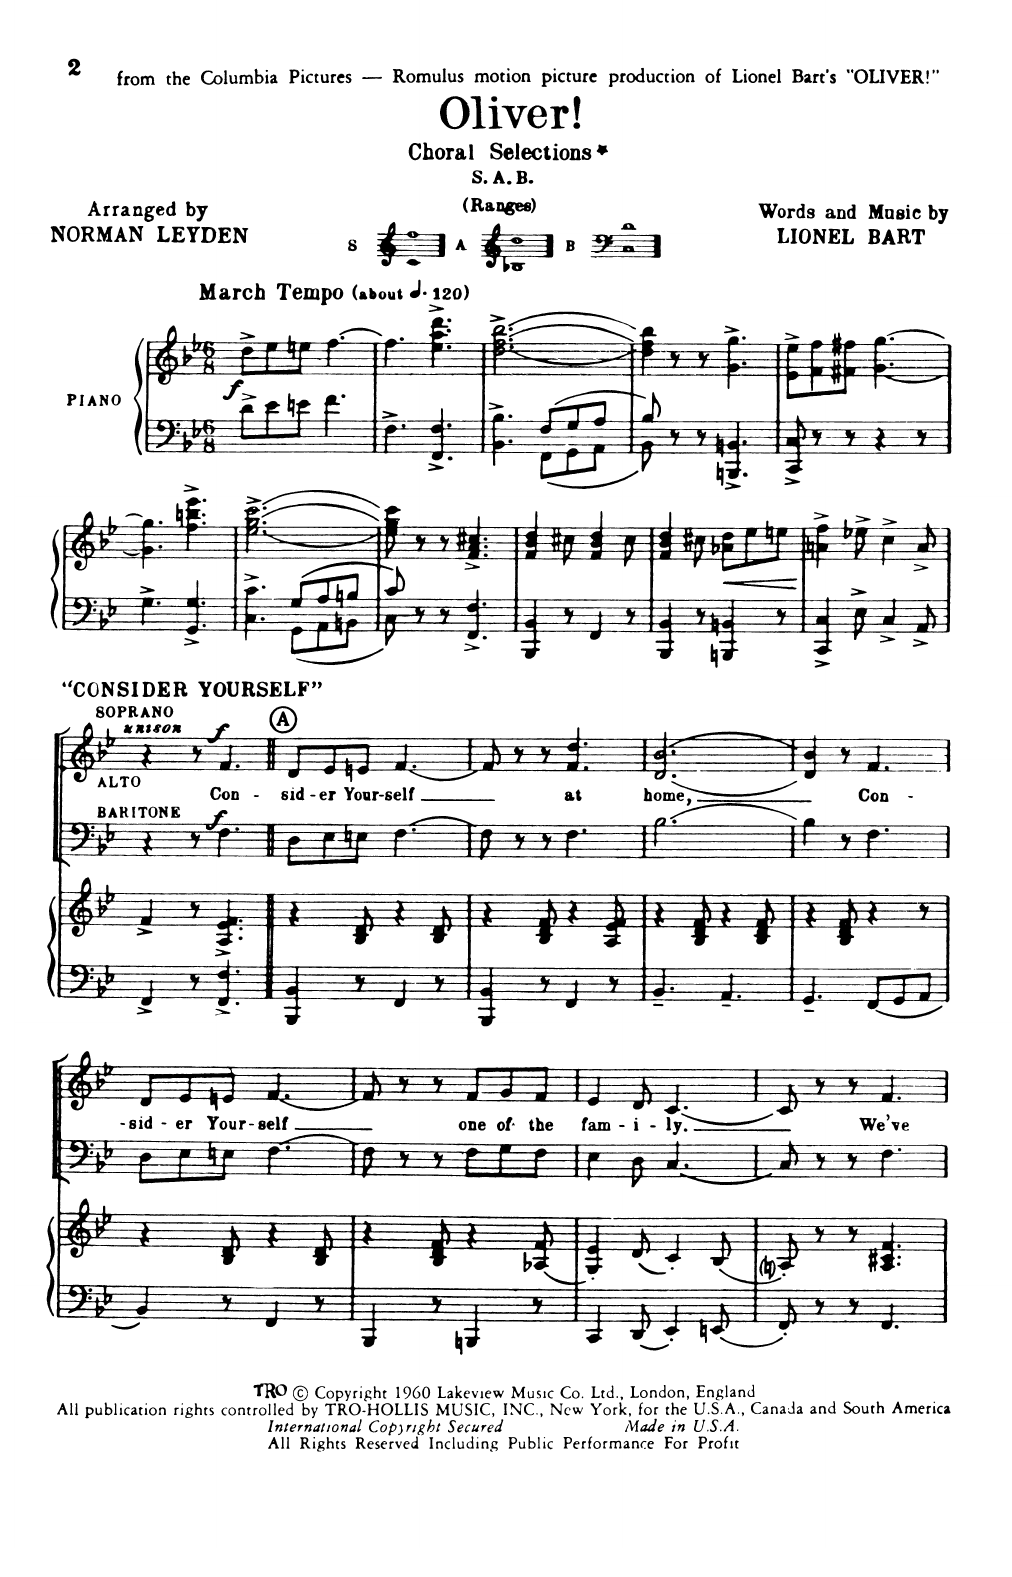 Lionel Bart Oliver! (Choral Selections) (arr. Norman Leyden) Sheet Music Notes & Chords for SSA Choir - Download or Print PDF